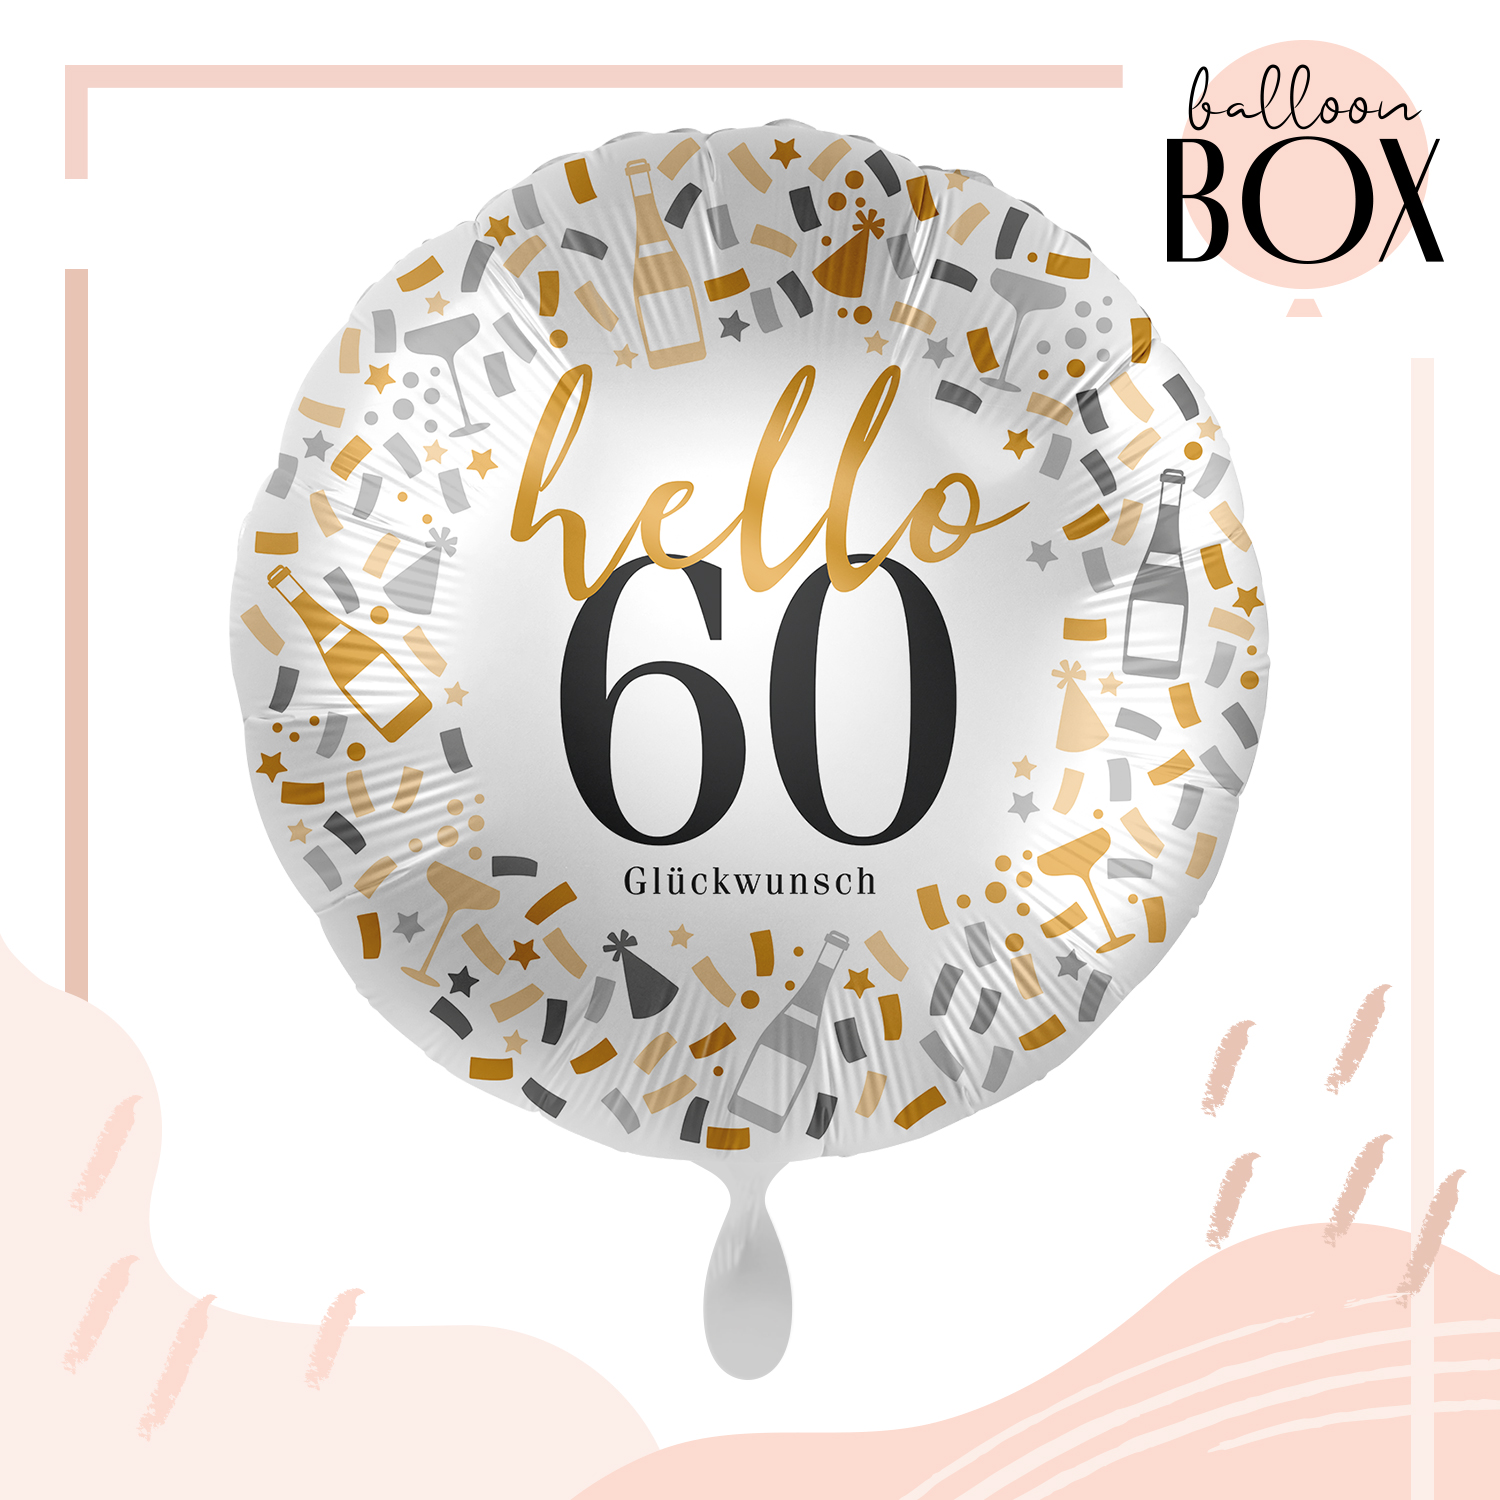 Heliumballon in a Box - Celebrate Birthday 60